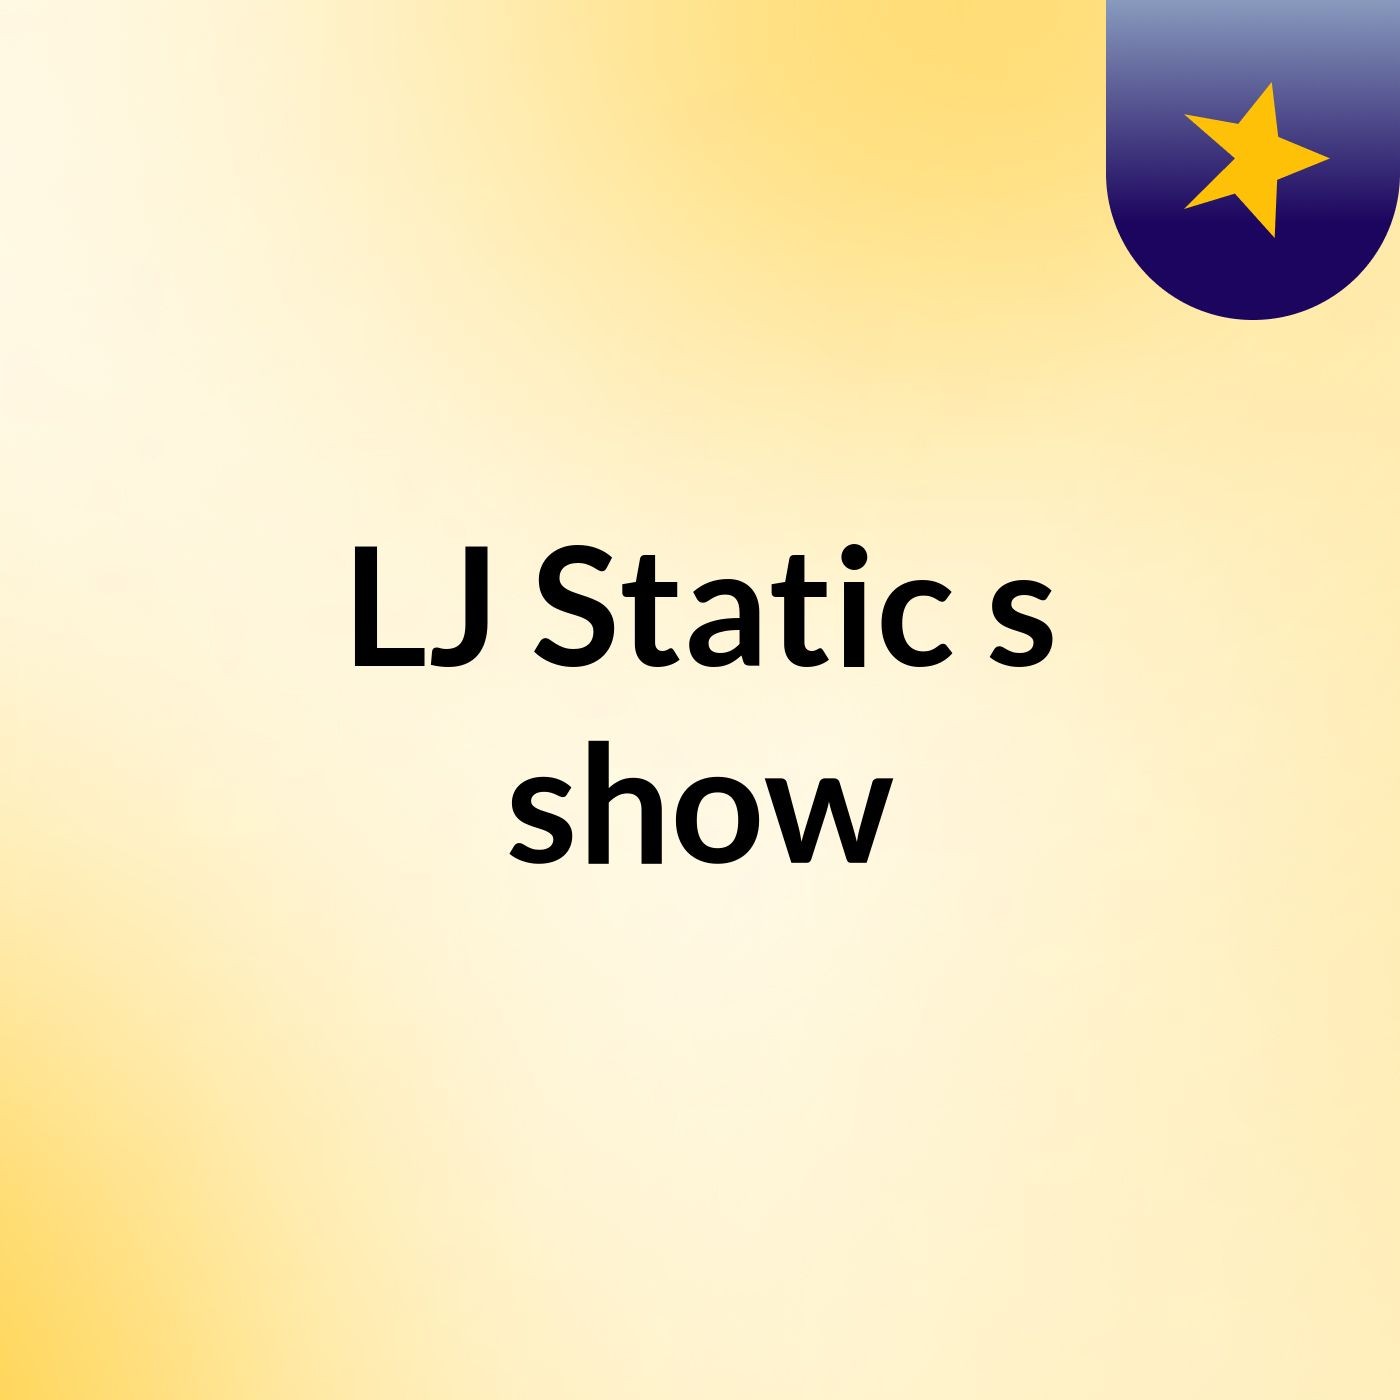 LJ Static's show